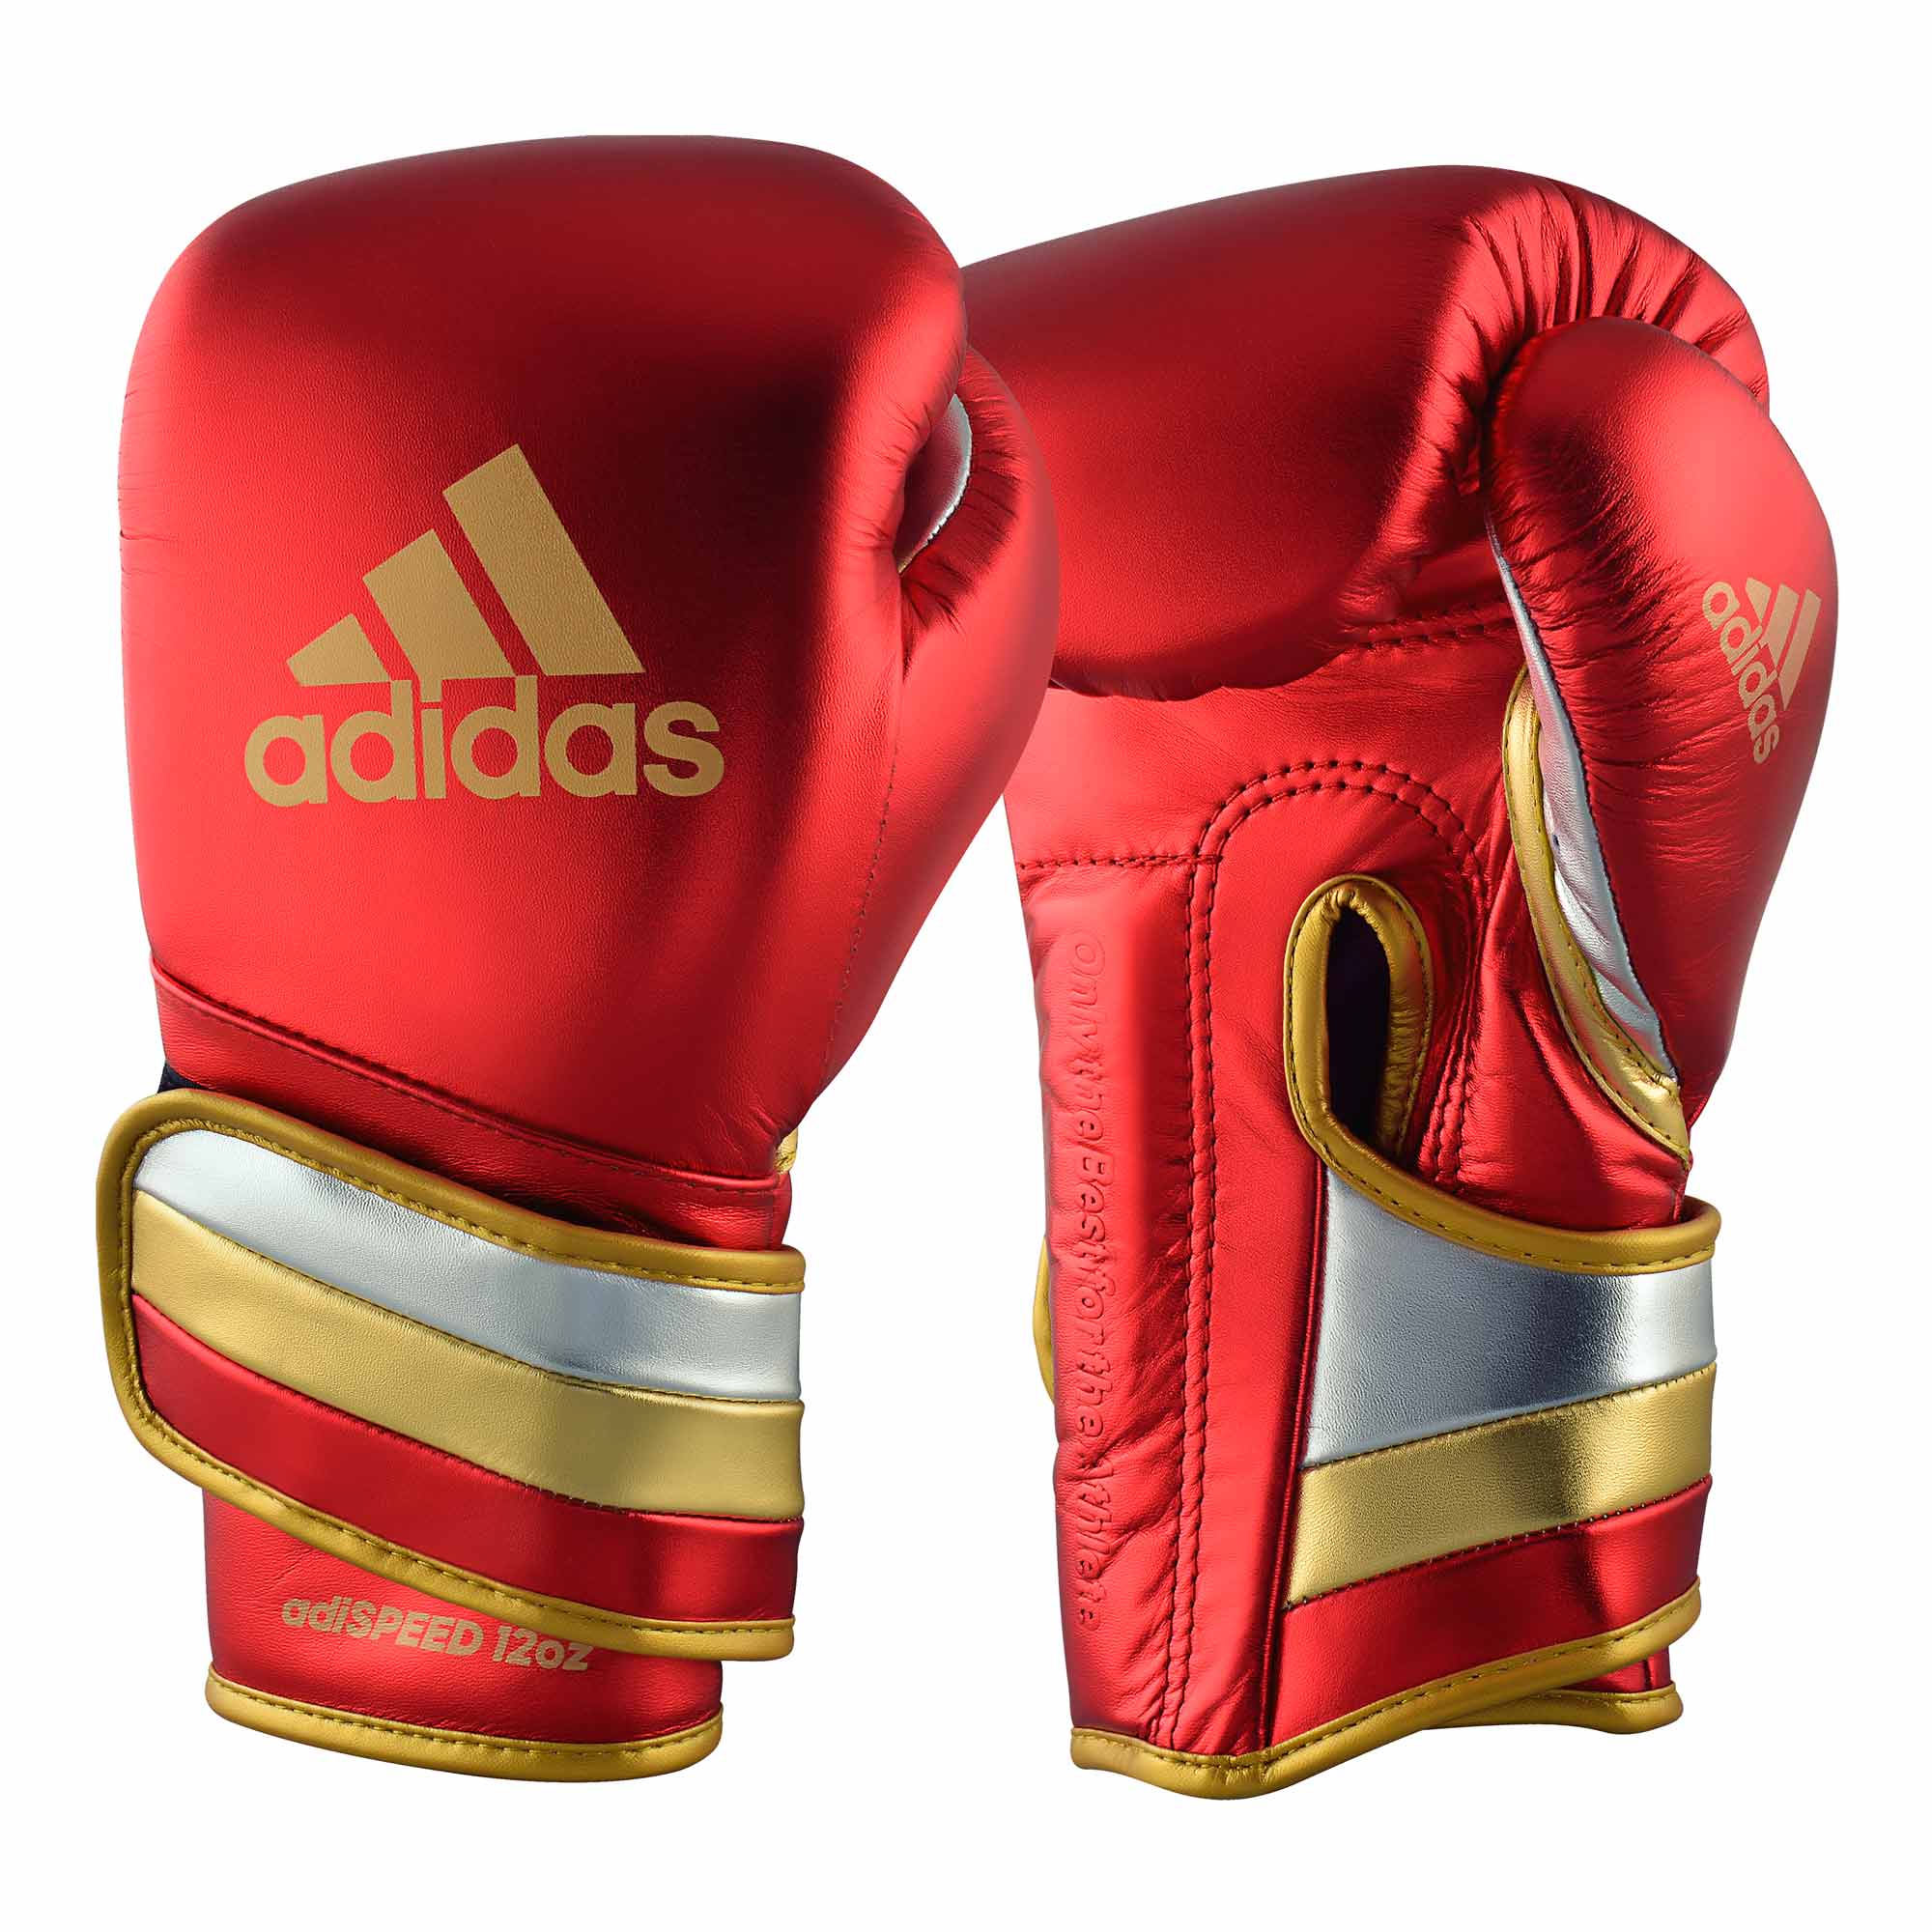 ADIDAS Boxhandschuhe adiSPEED strap up | Kickbox metallic/gold, | Boxhandschuhe Ausrüstung | red Handschuhe